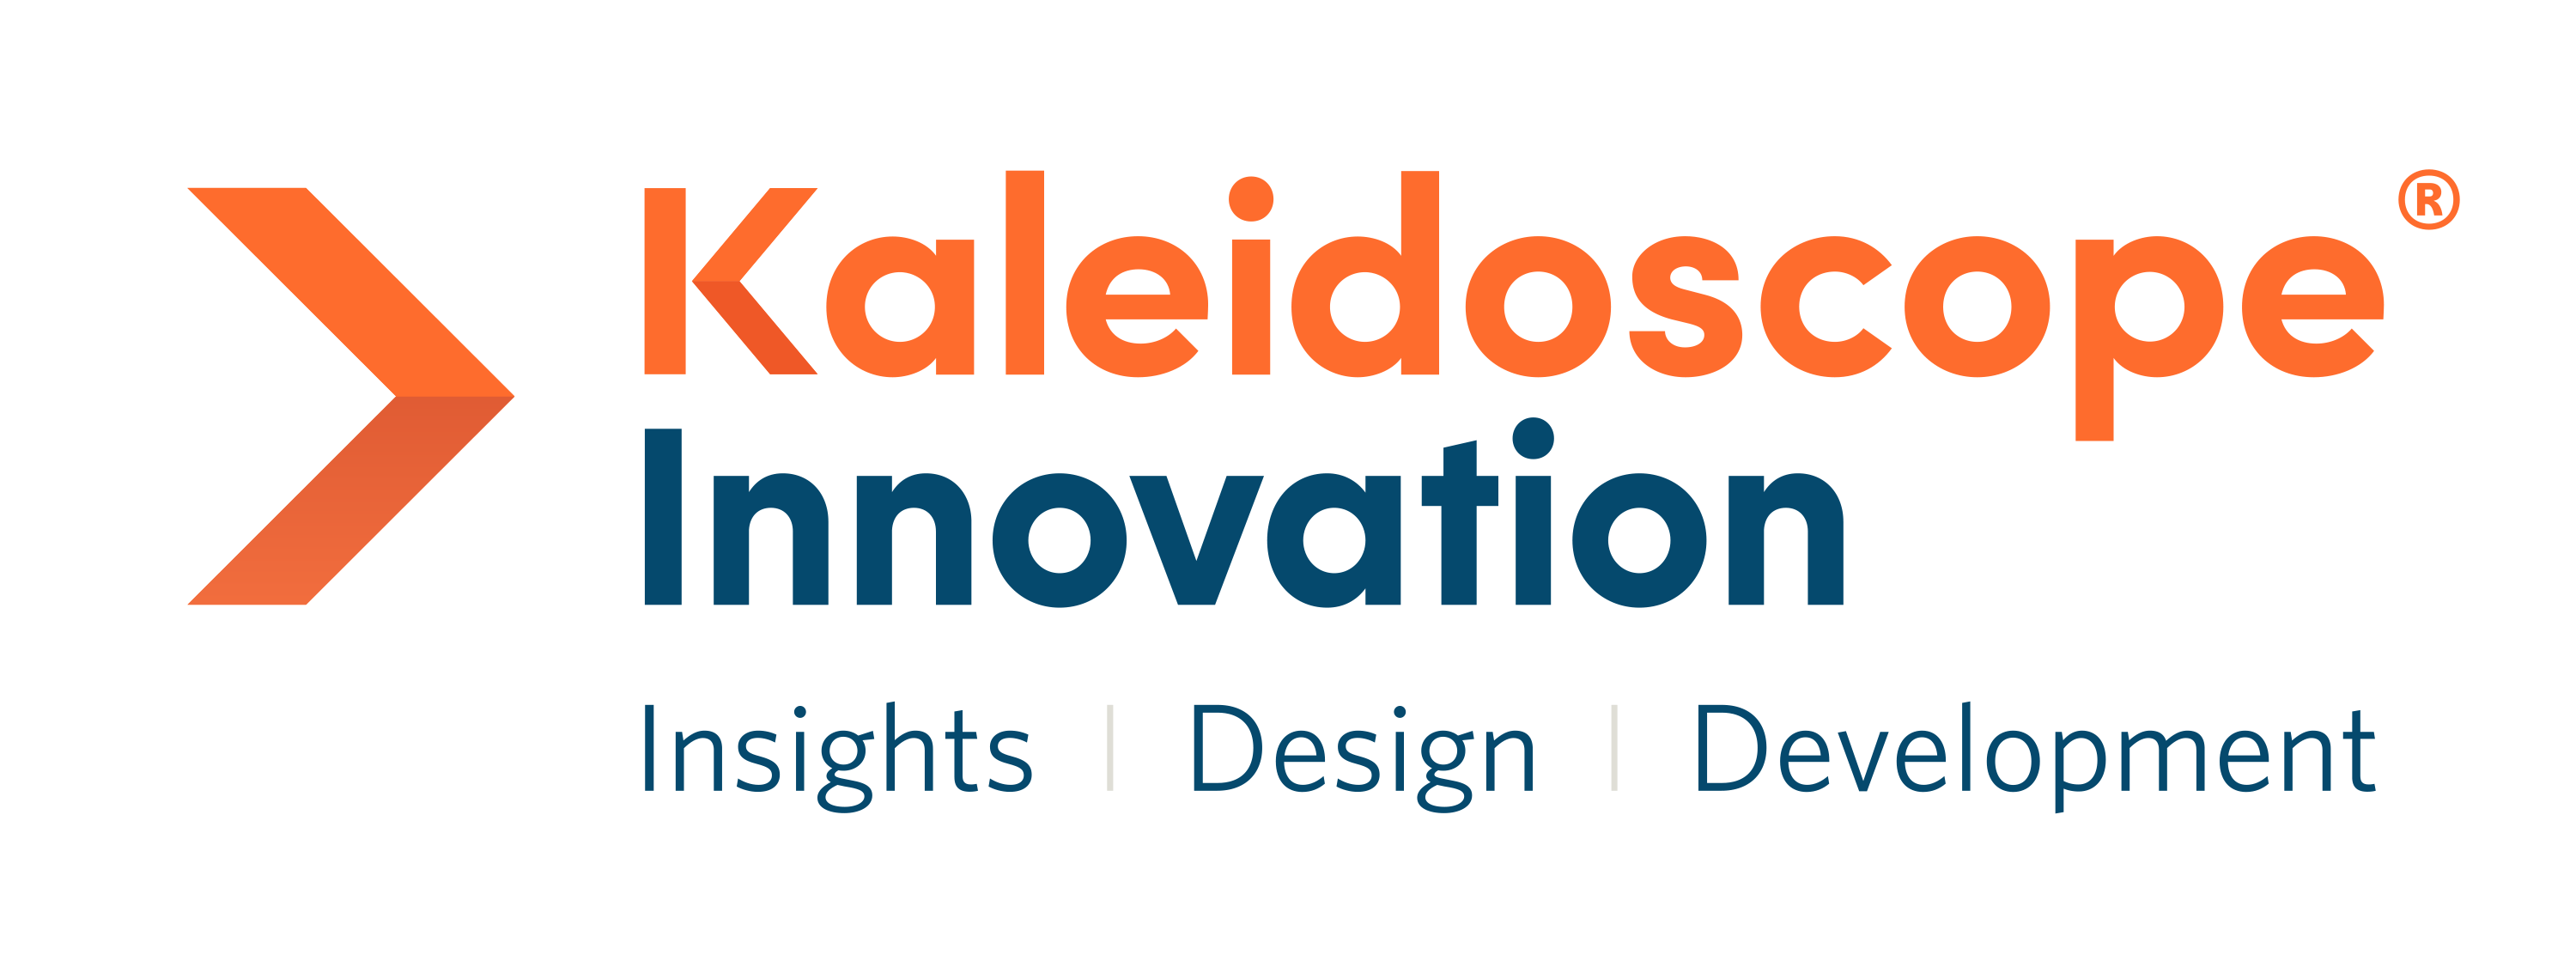 kaleidoscope image company